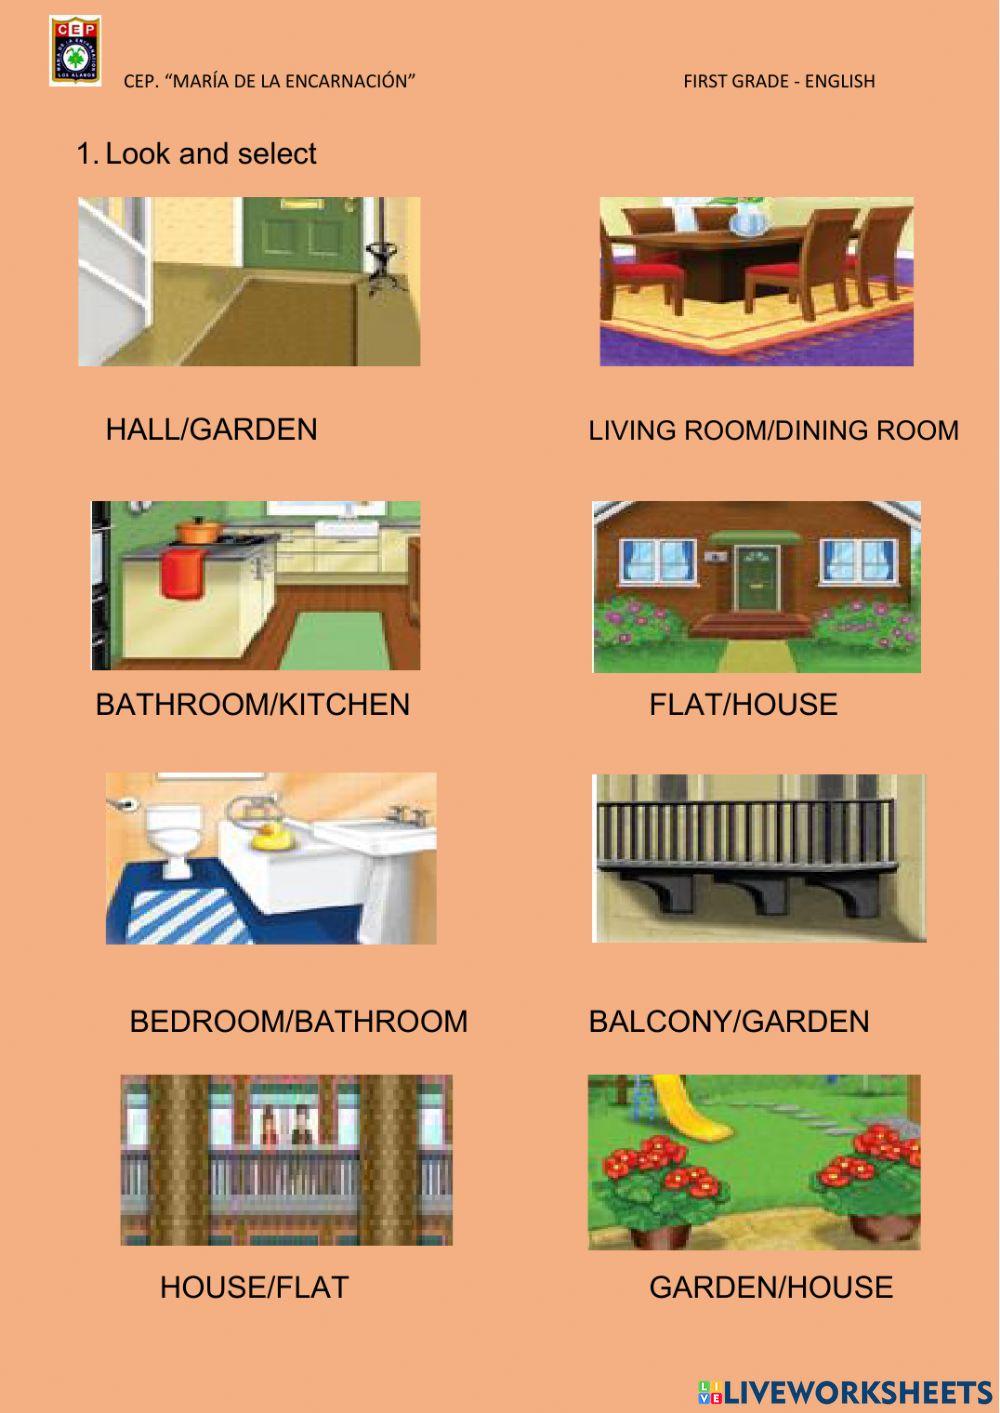 House vocabulary